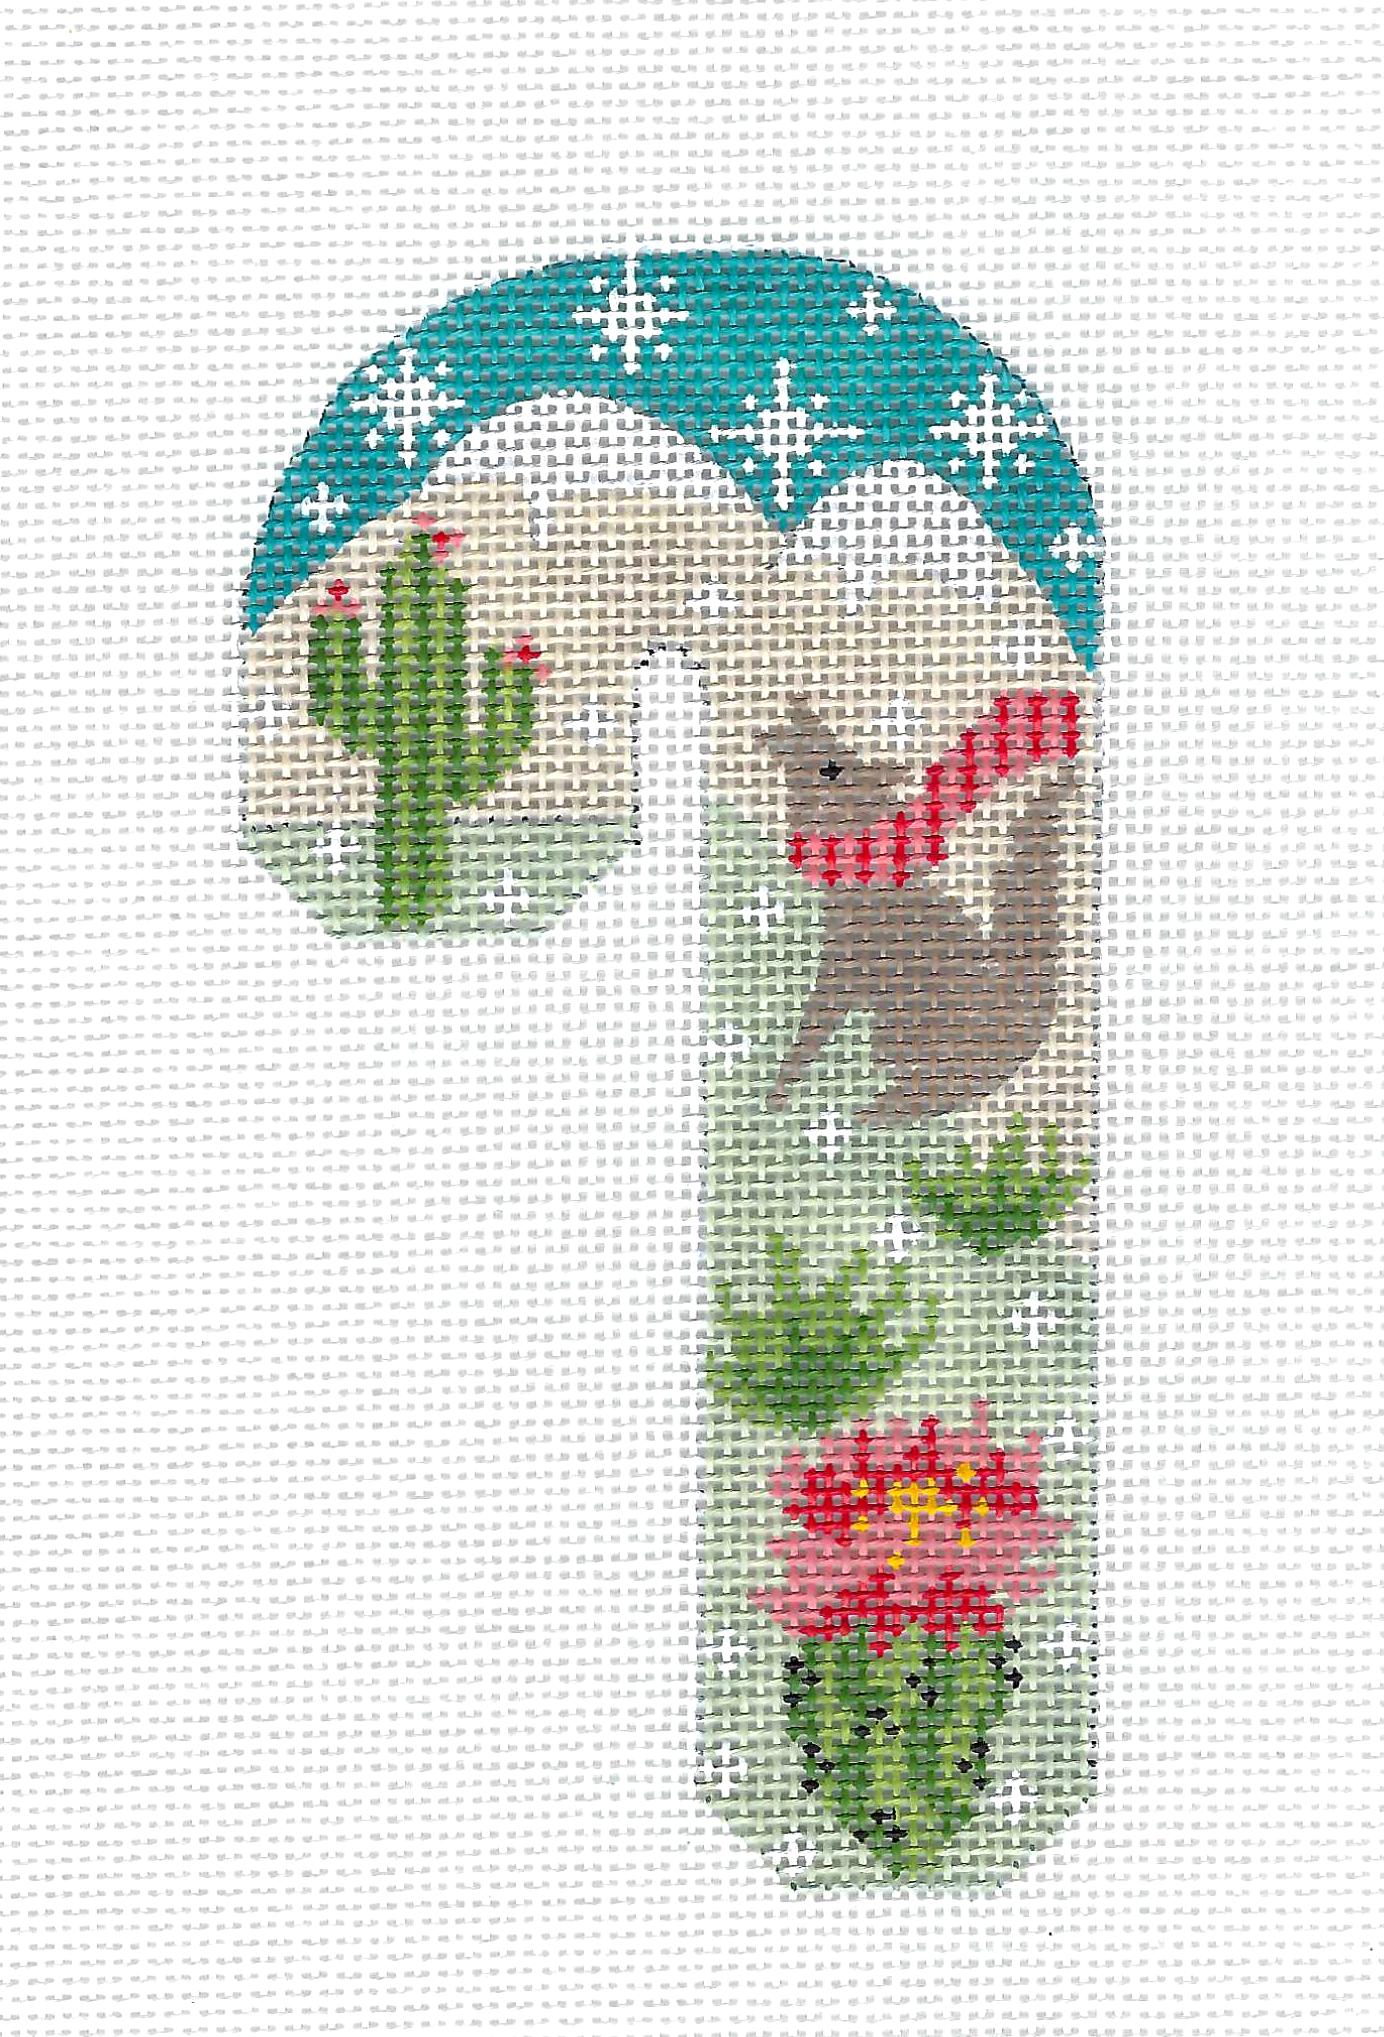 Candy Cane ~ Southwest Cactus Desert Medium Candy Cane handpainted Needlepoint Canvas CH Design from Danji